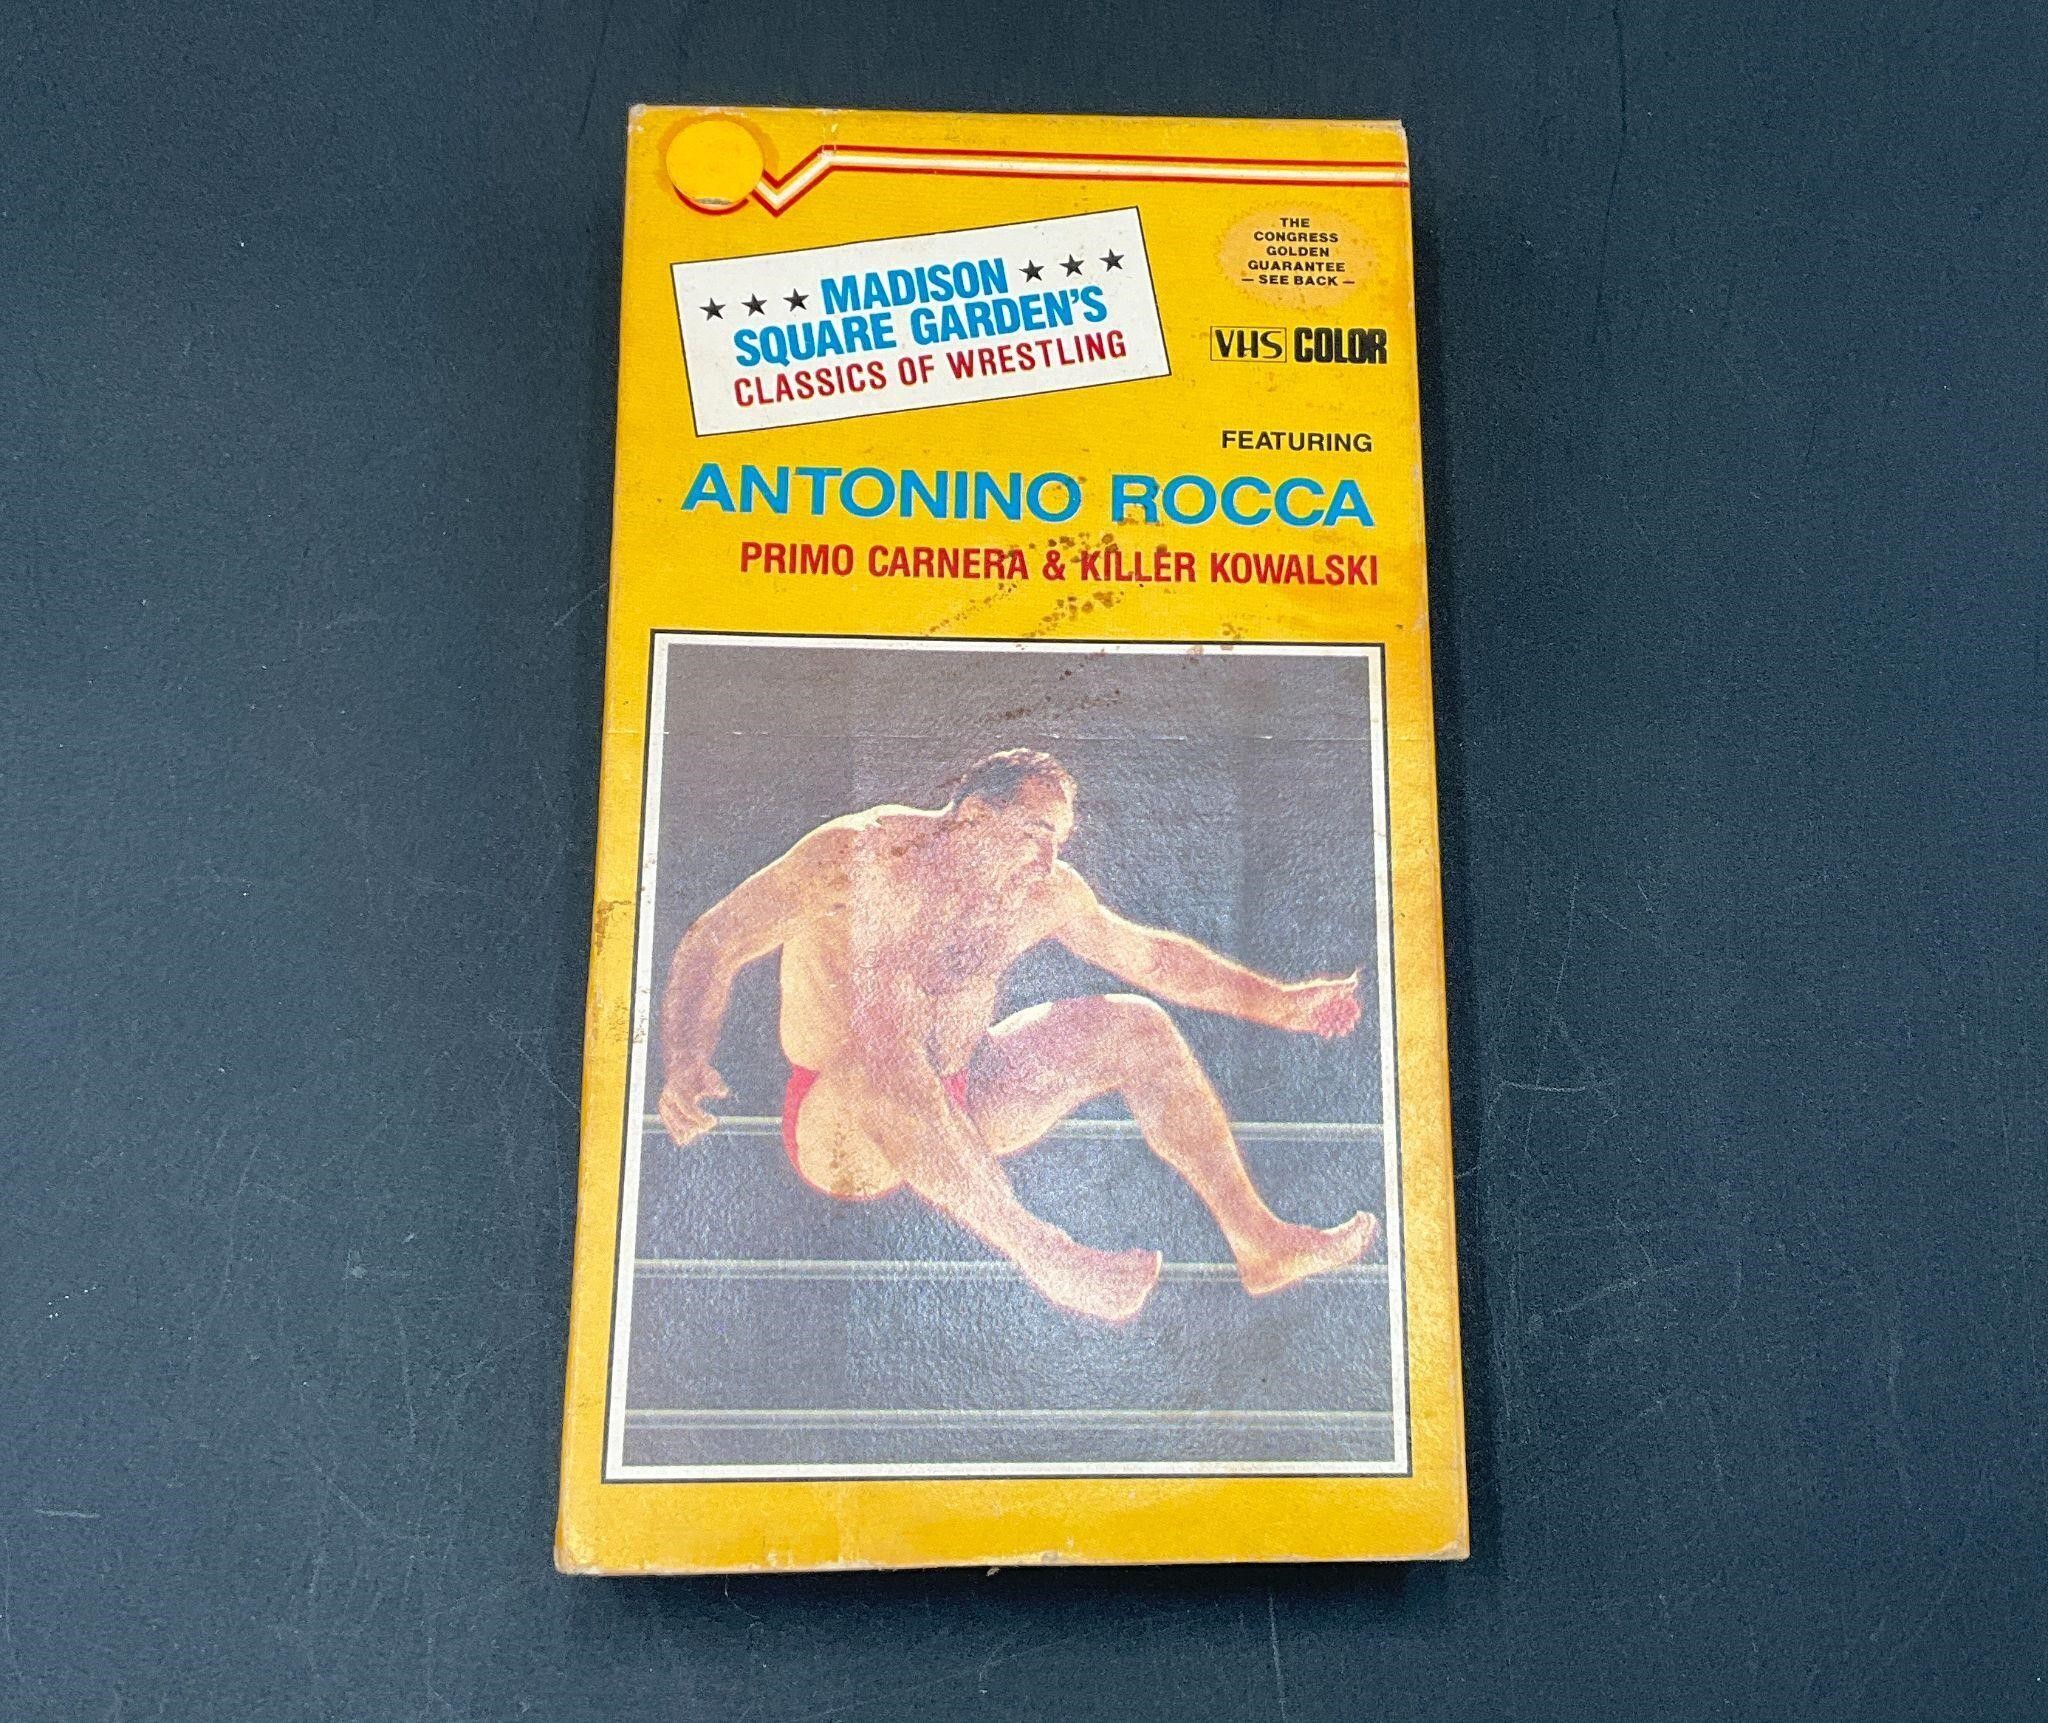 Antonino Rocca Classics of Wrestling 1986 VHS Tape